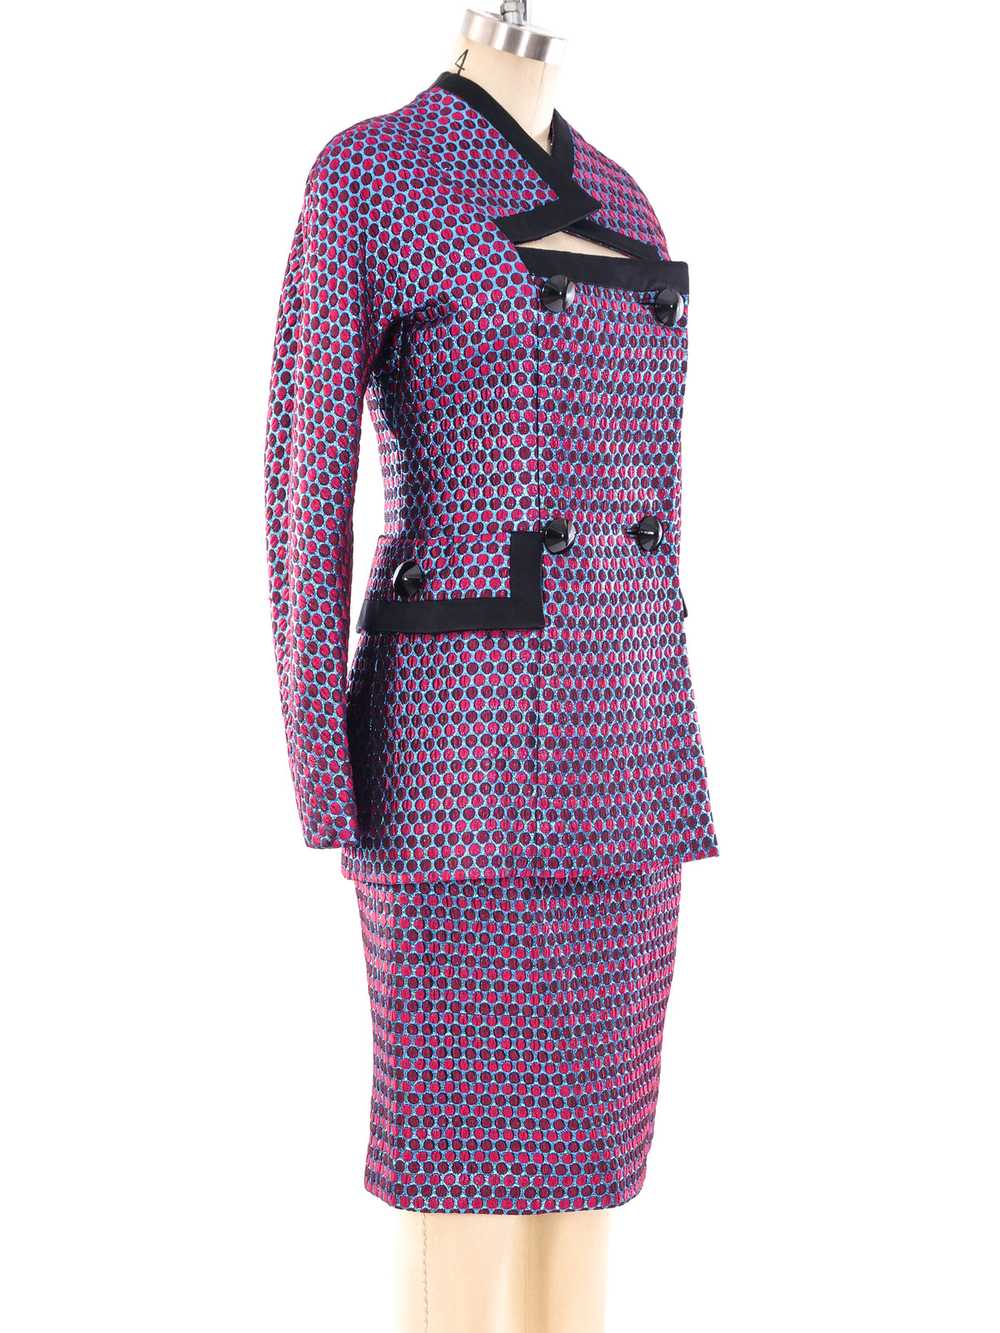 Galanos Tailored Iridescent Brocade Skirt Suit - image 2